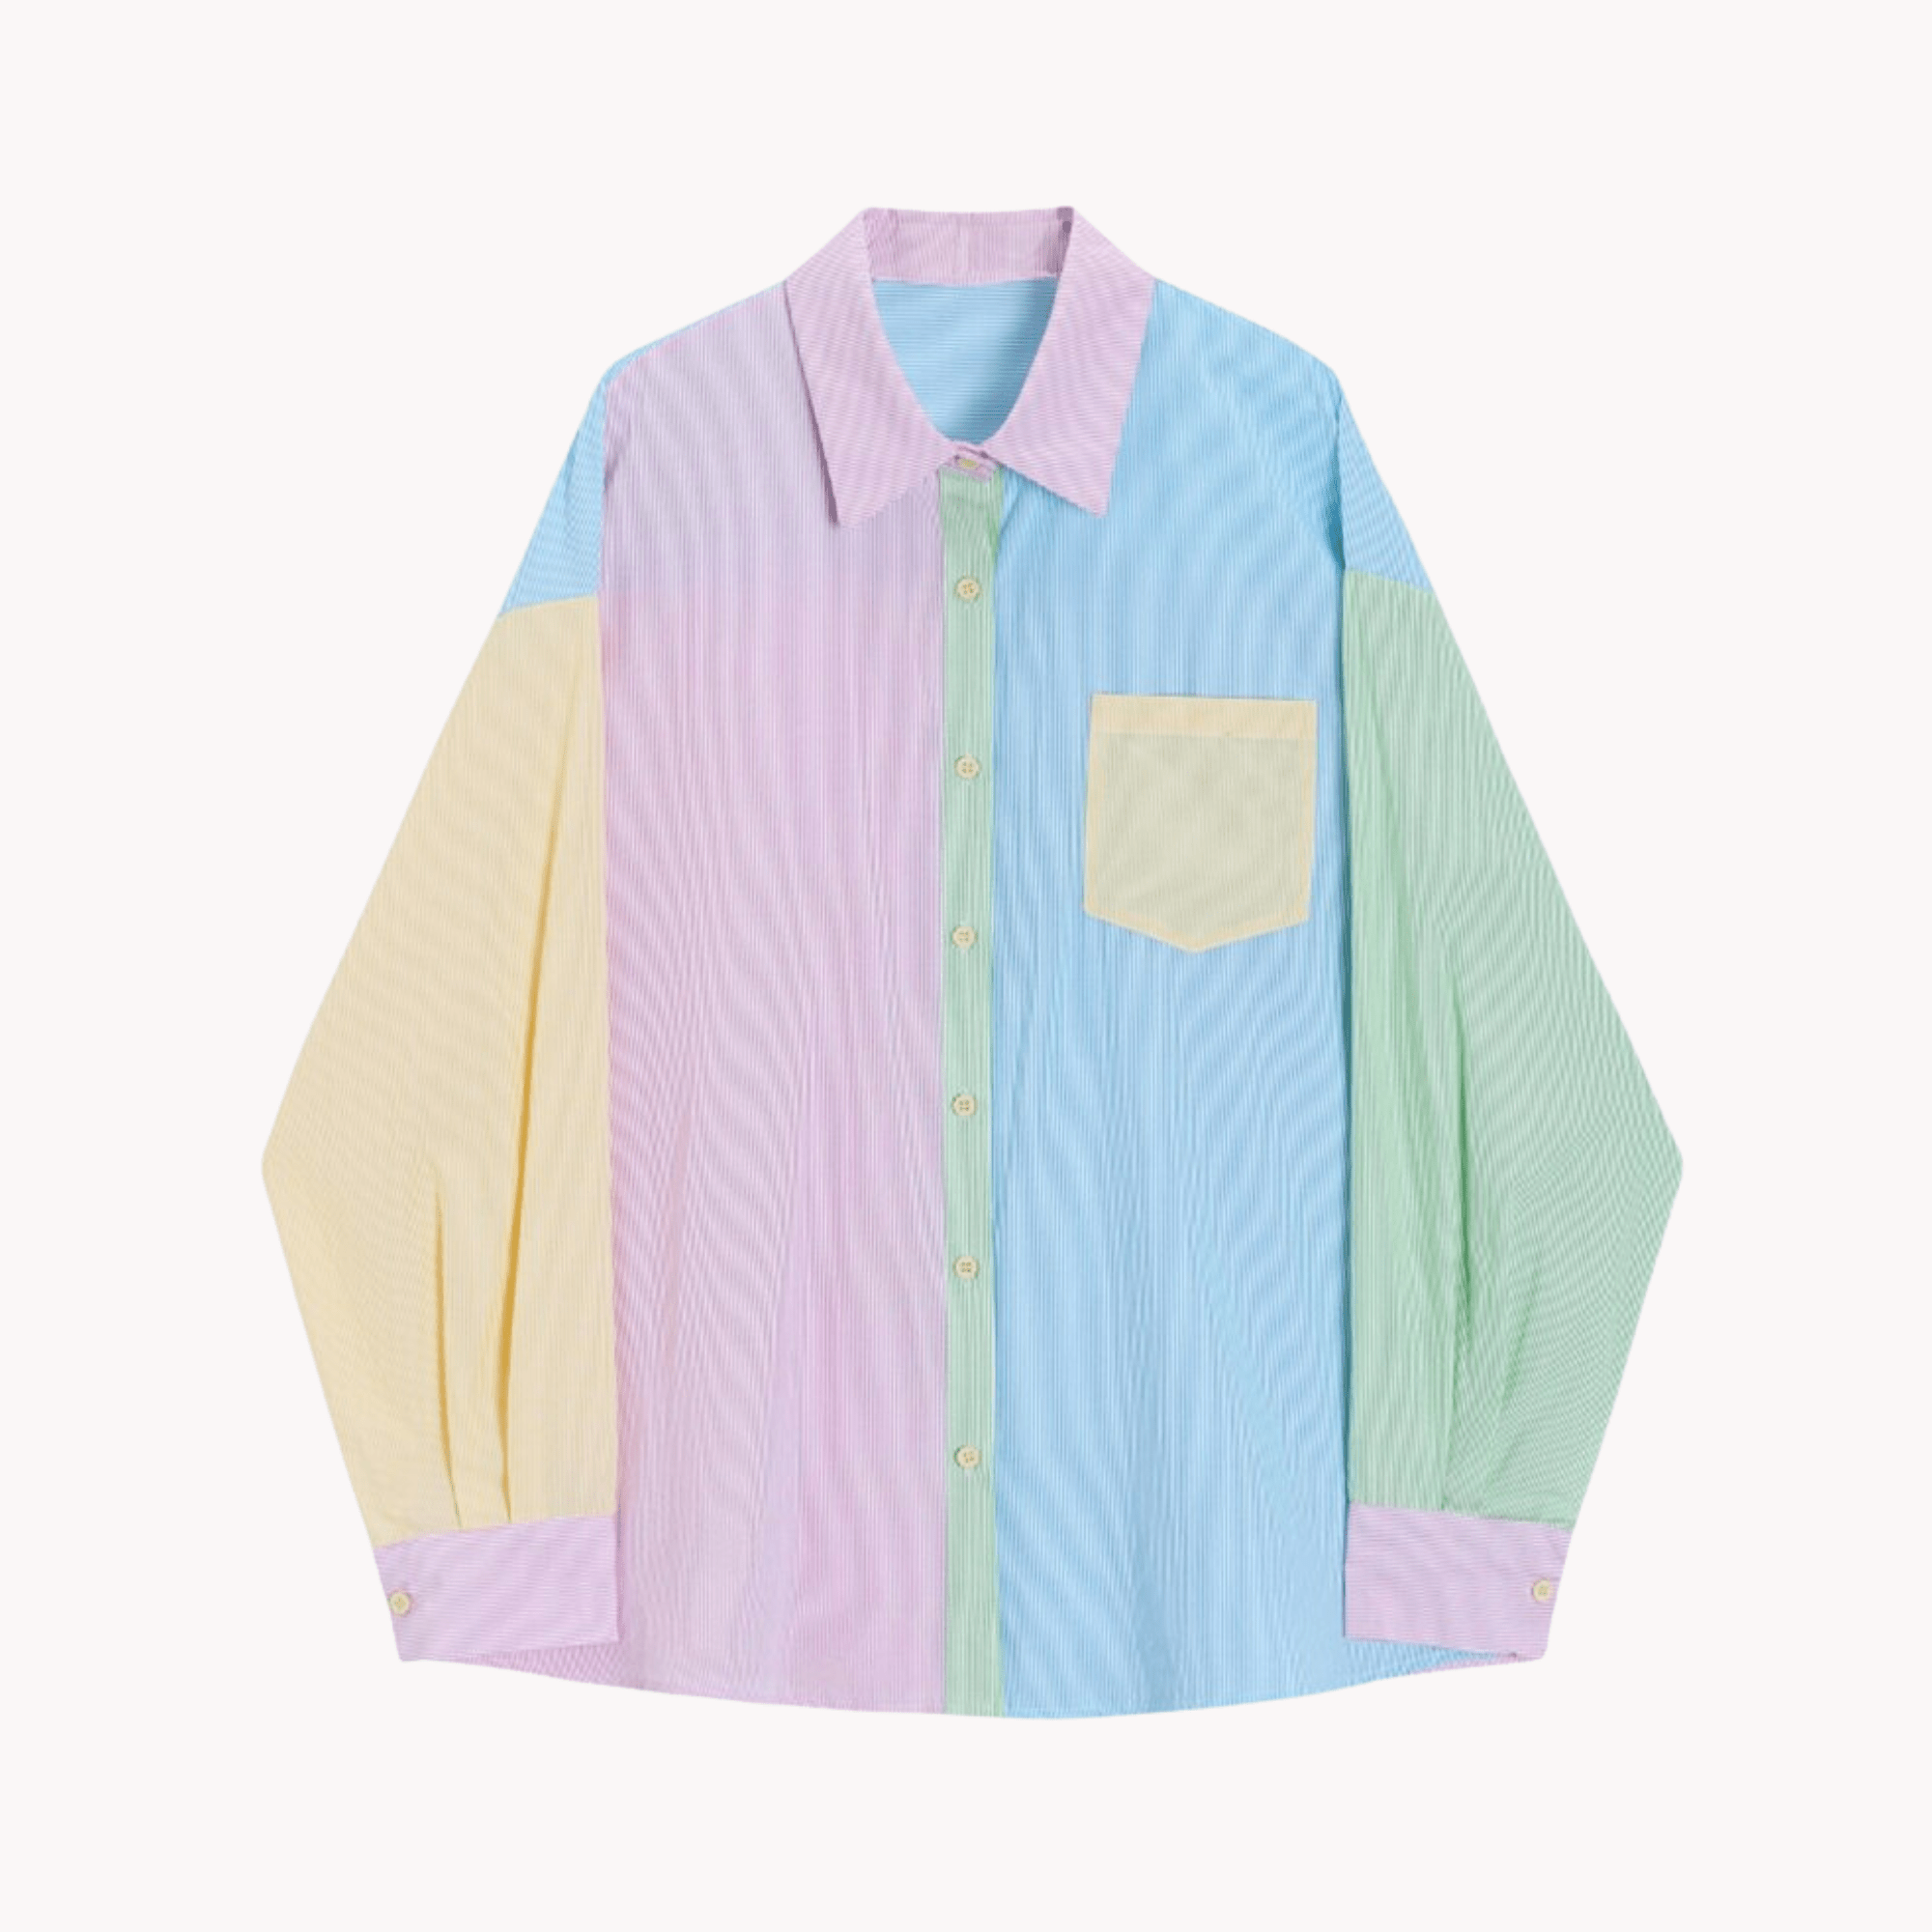 Multicolor Pastel Striped Shirt - Kelly Obi New York